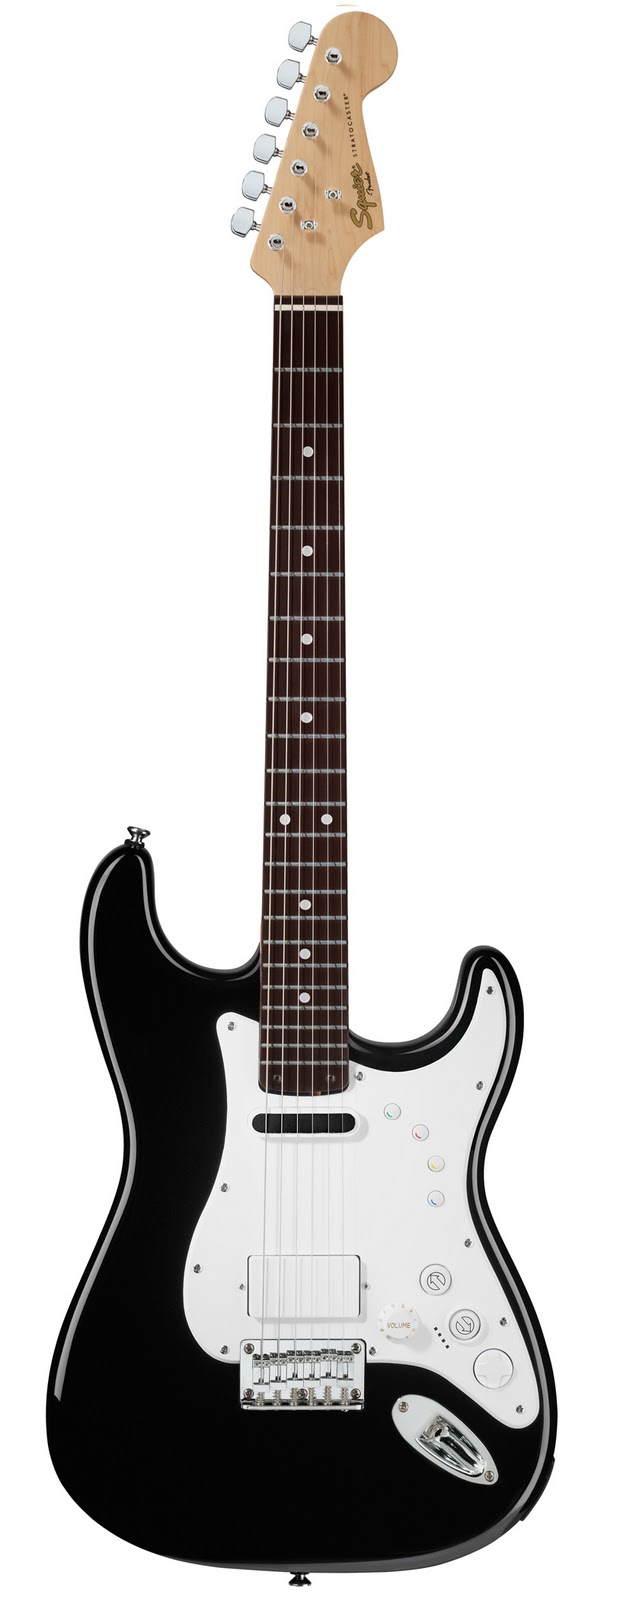 Fender Stratocaster Guitar Forum